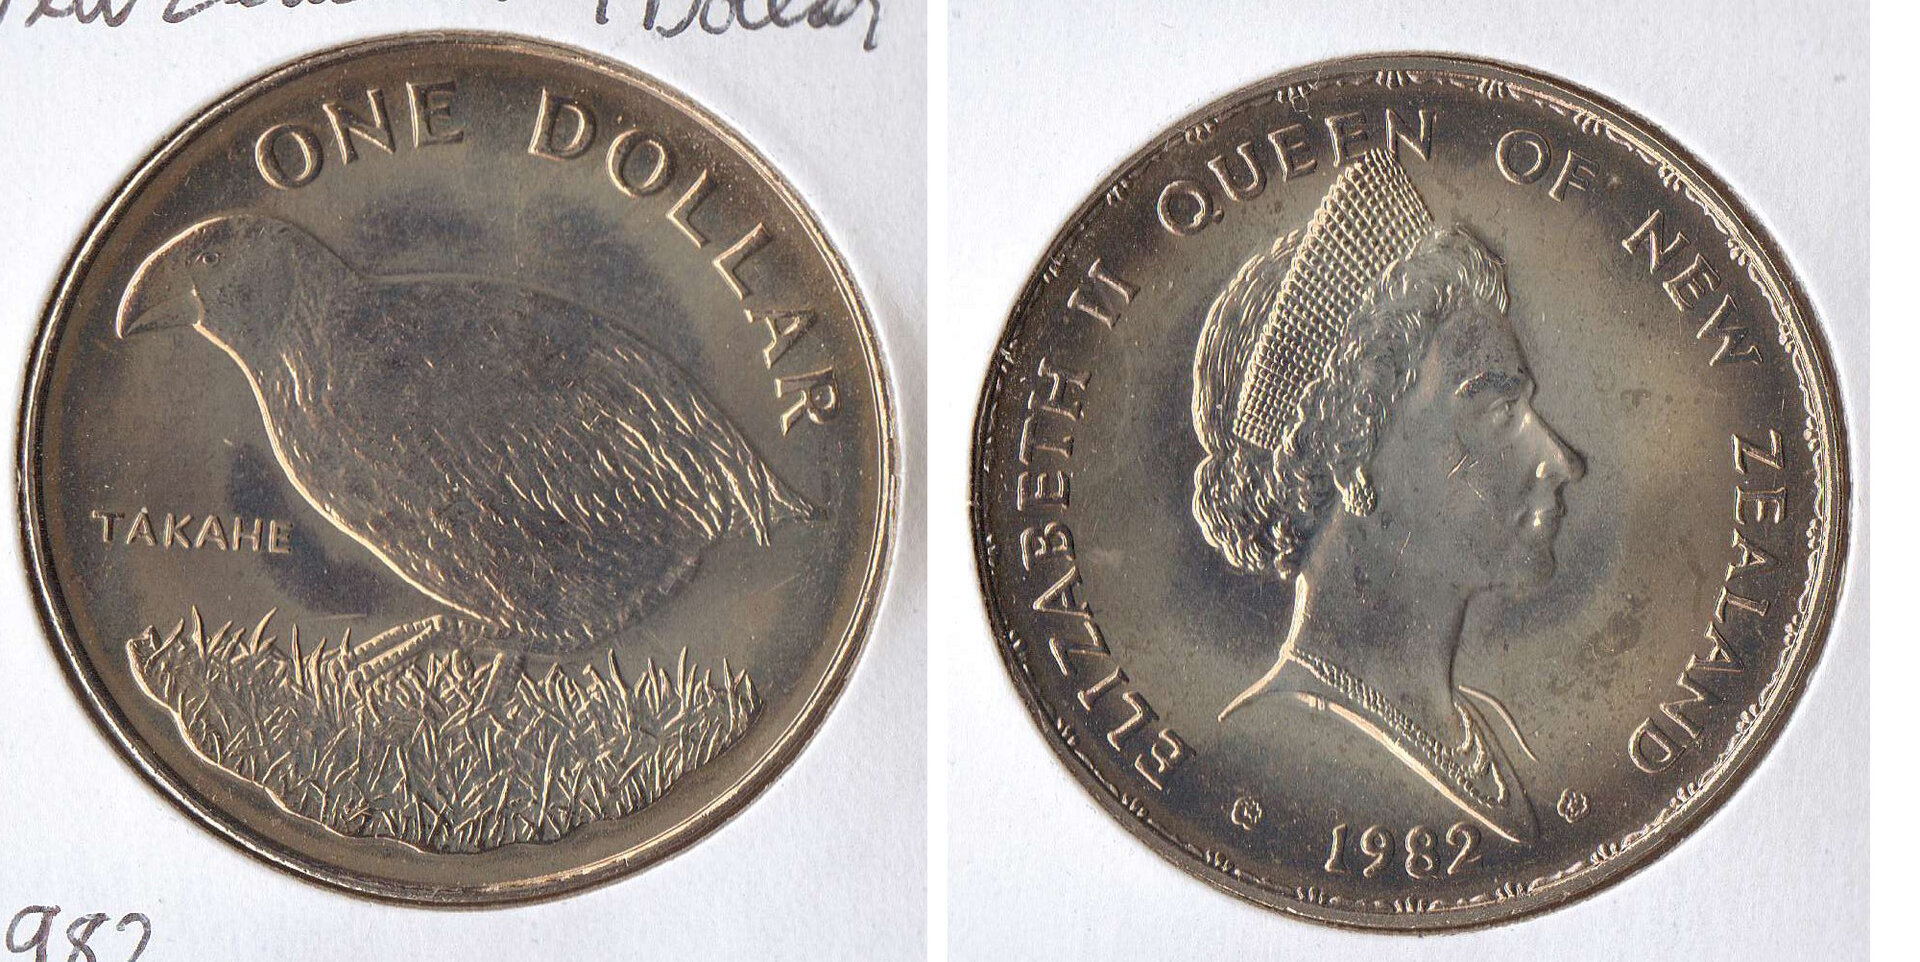 1982 new zealand dollar.jpg